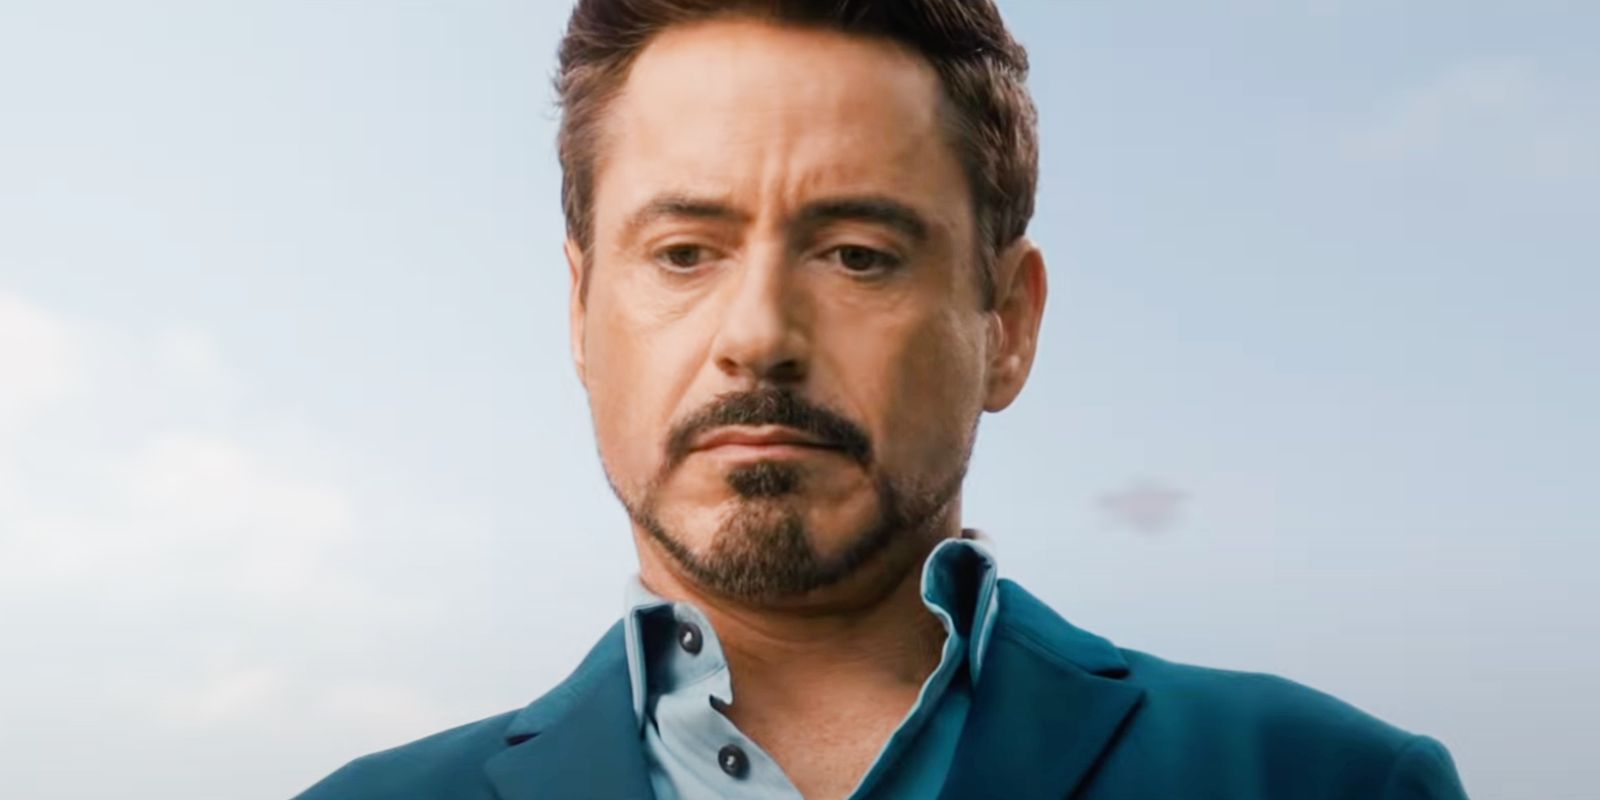 Robert Downey Jr. as Tony Stark in a Suit in Iron Man 3